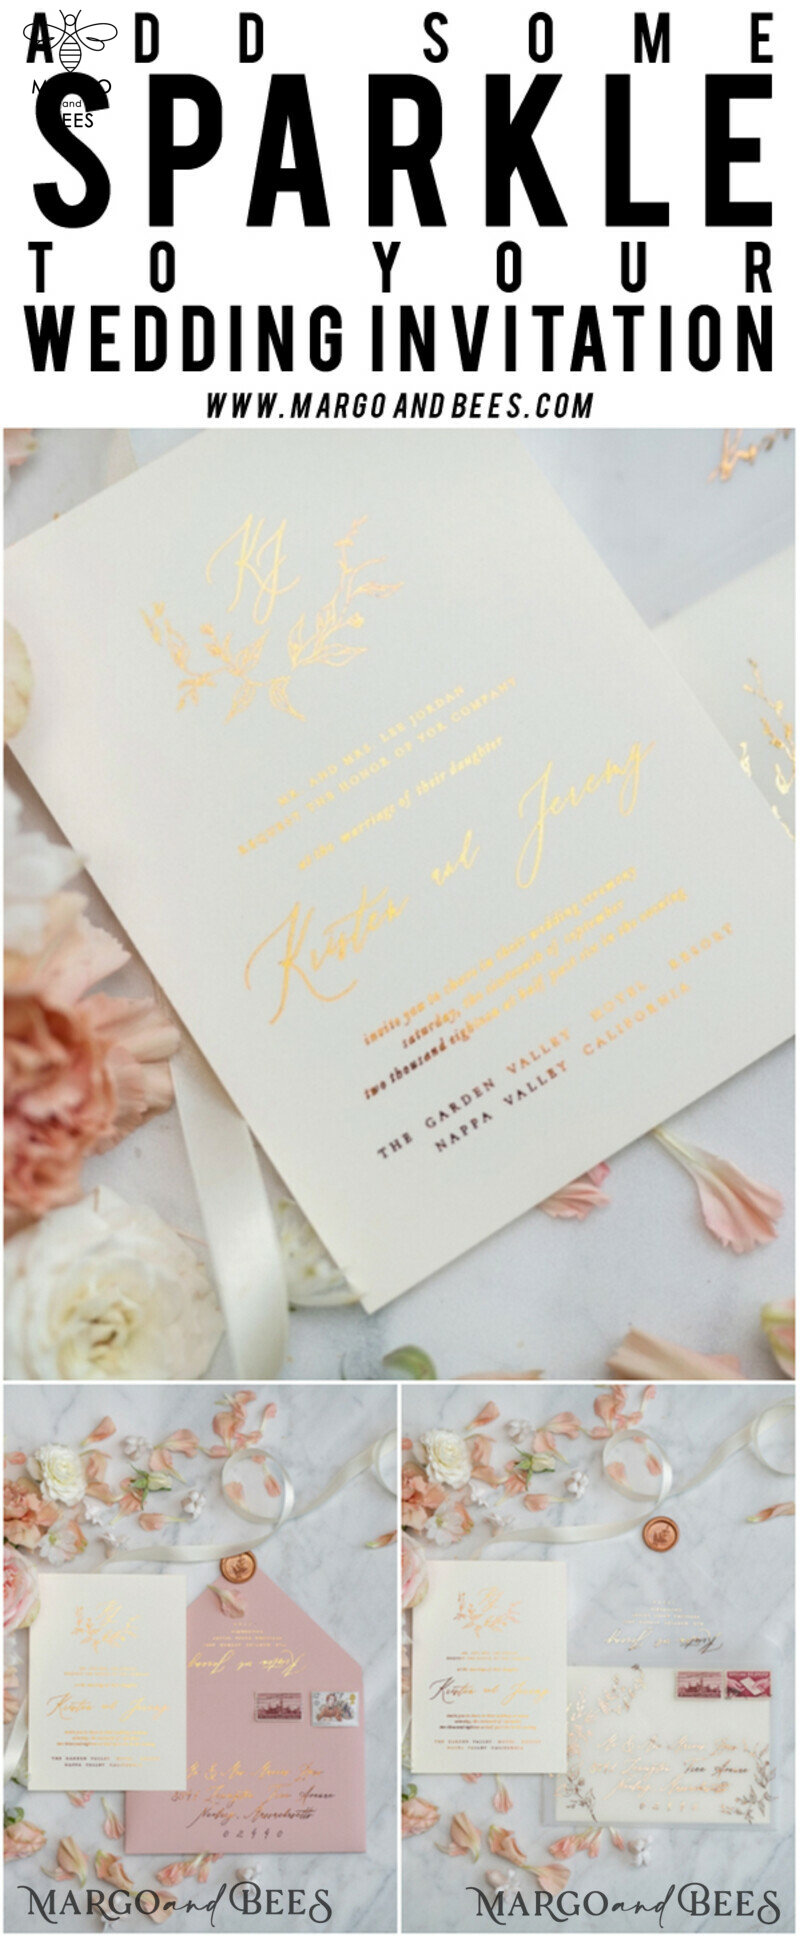 Bespoke Vellum Wedding Invitation Suite: Romantic Blush Pink and Glamour Gold Foil for an Elegant Golden Affair-41